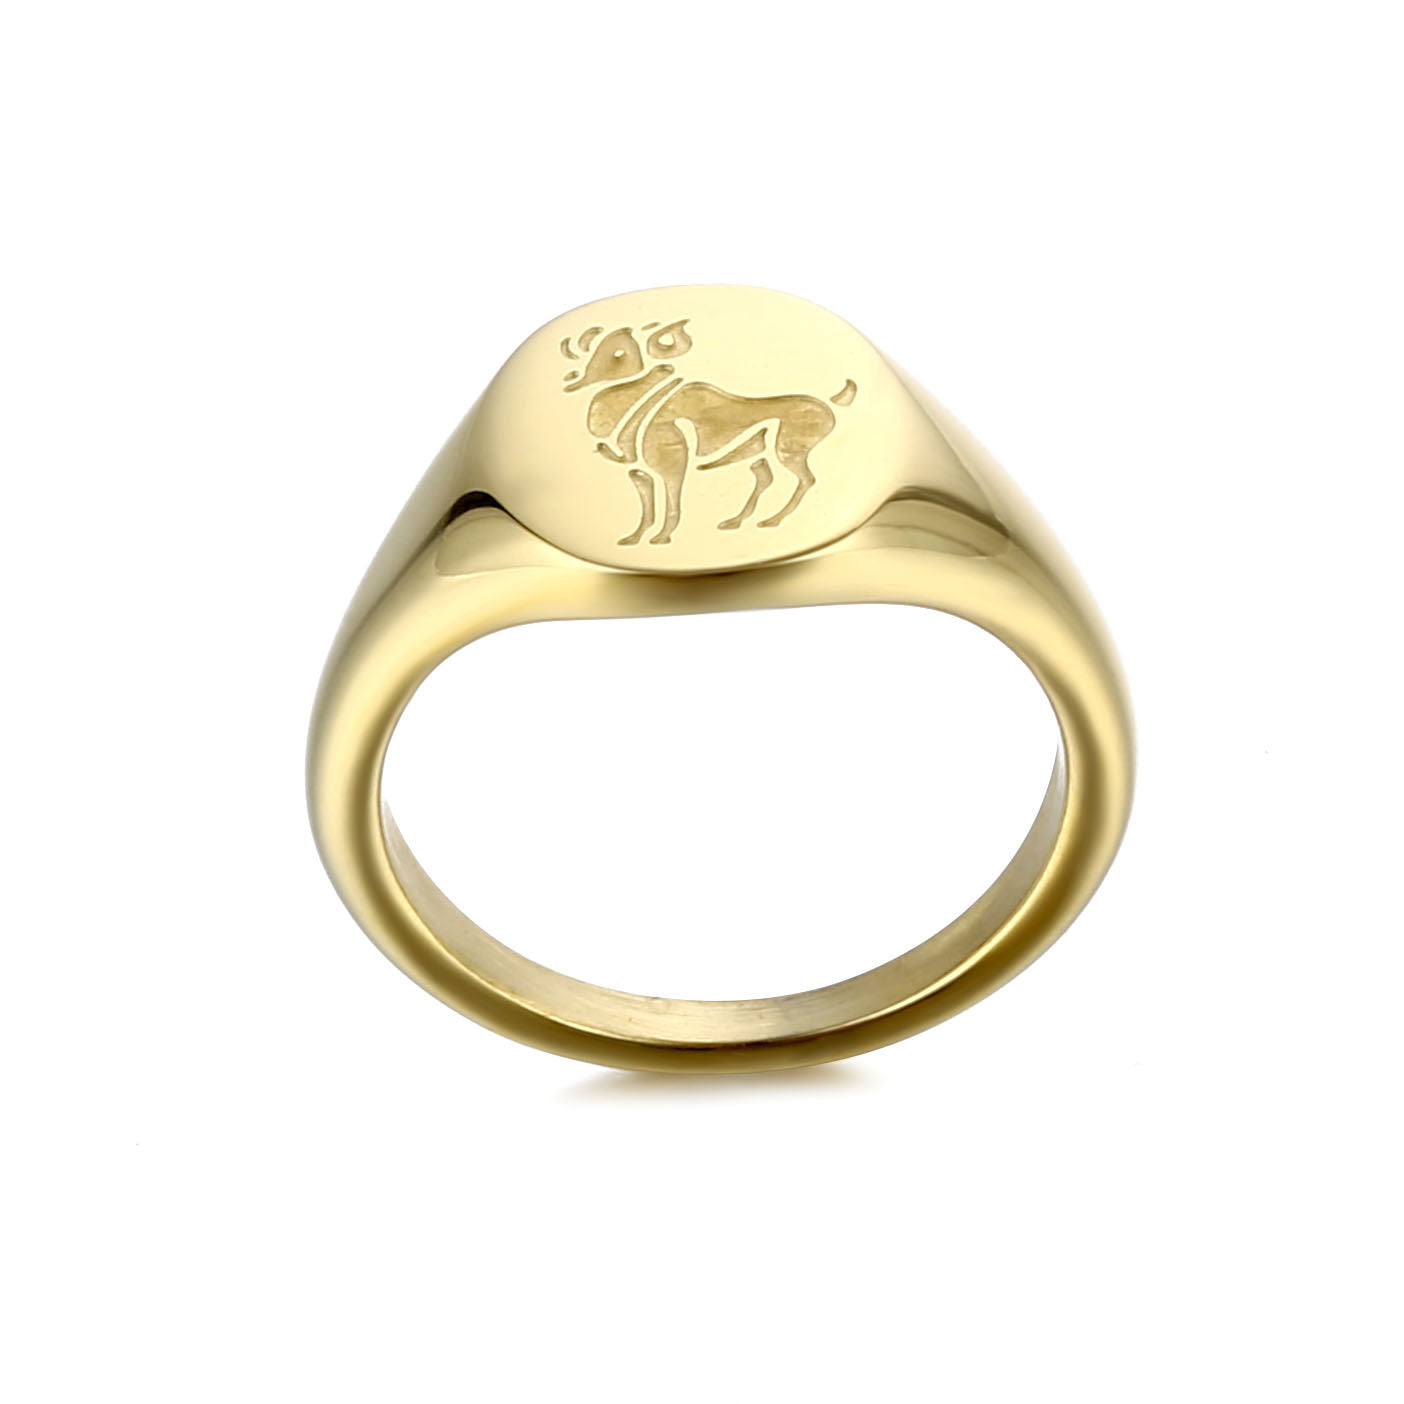 Zodiac ring